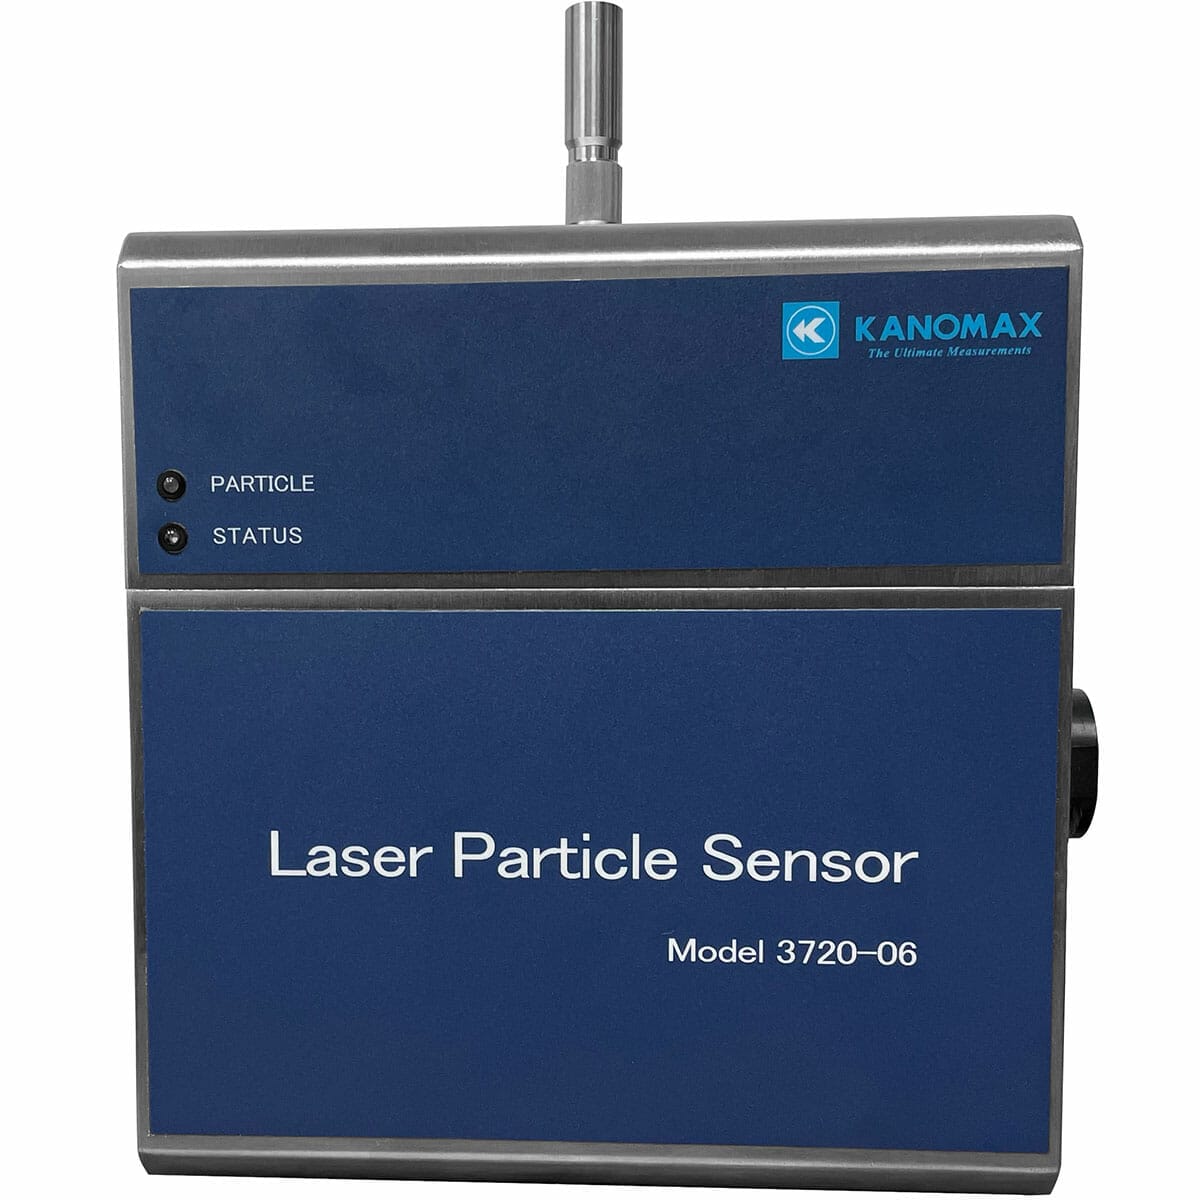 Kanomax Laser Particle Sensor - Model 3720-06